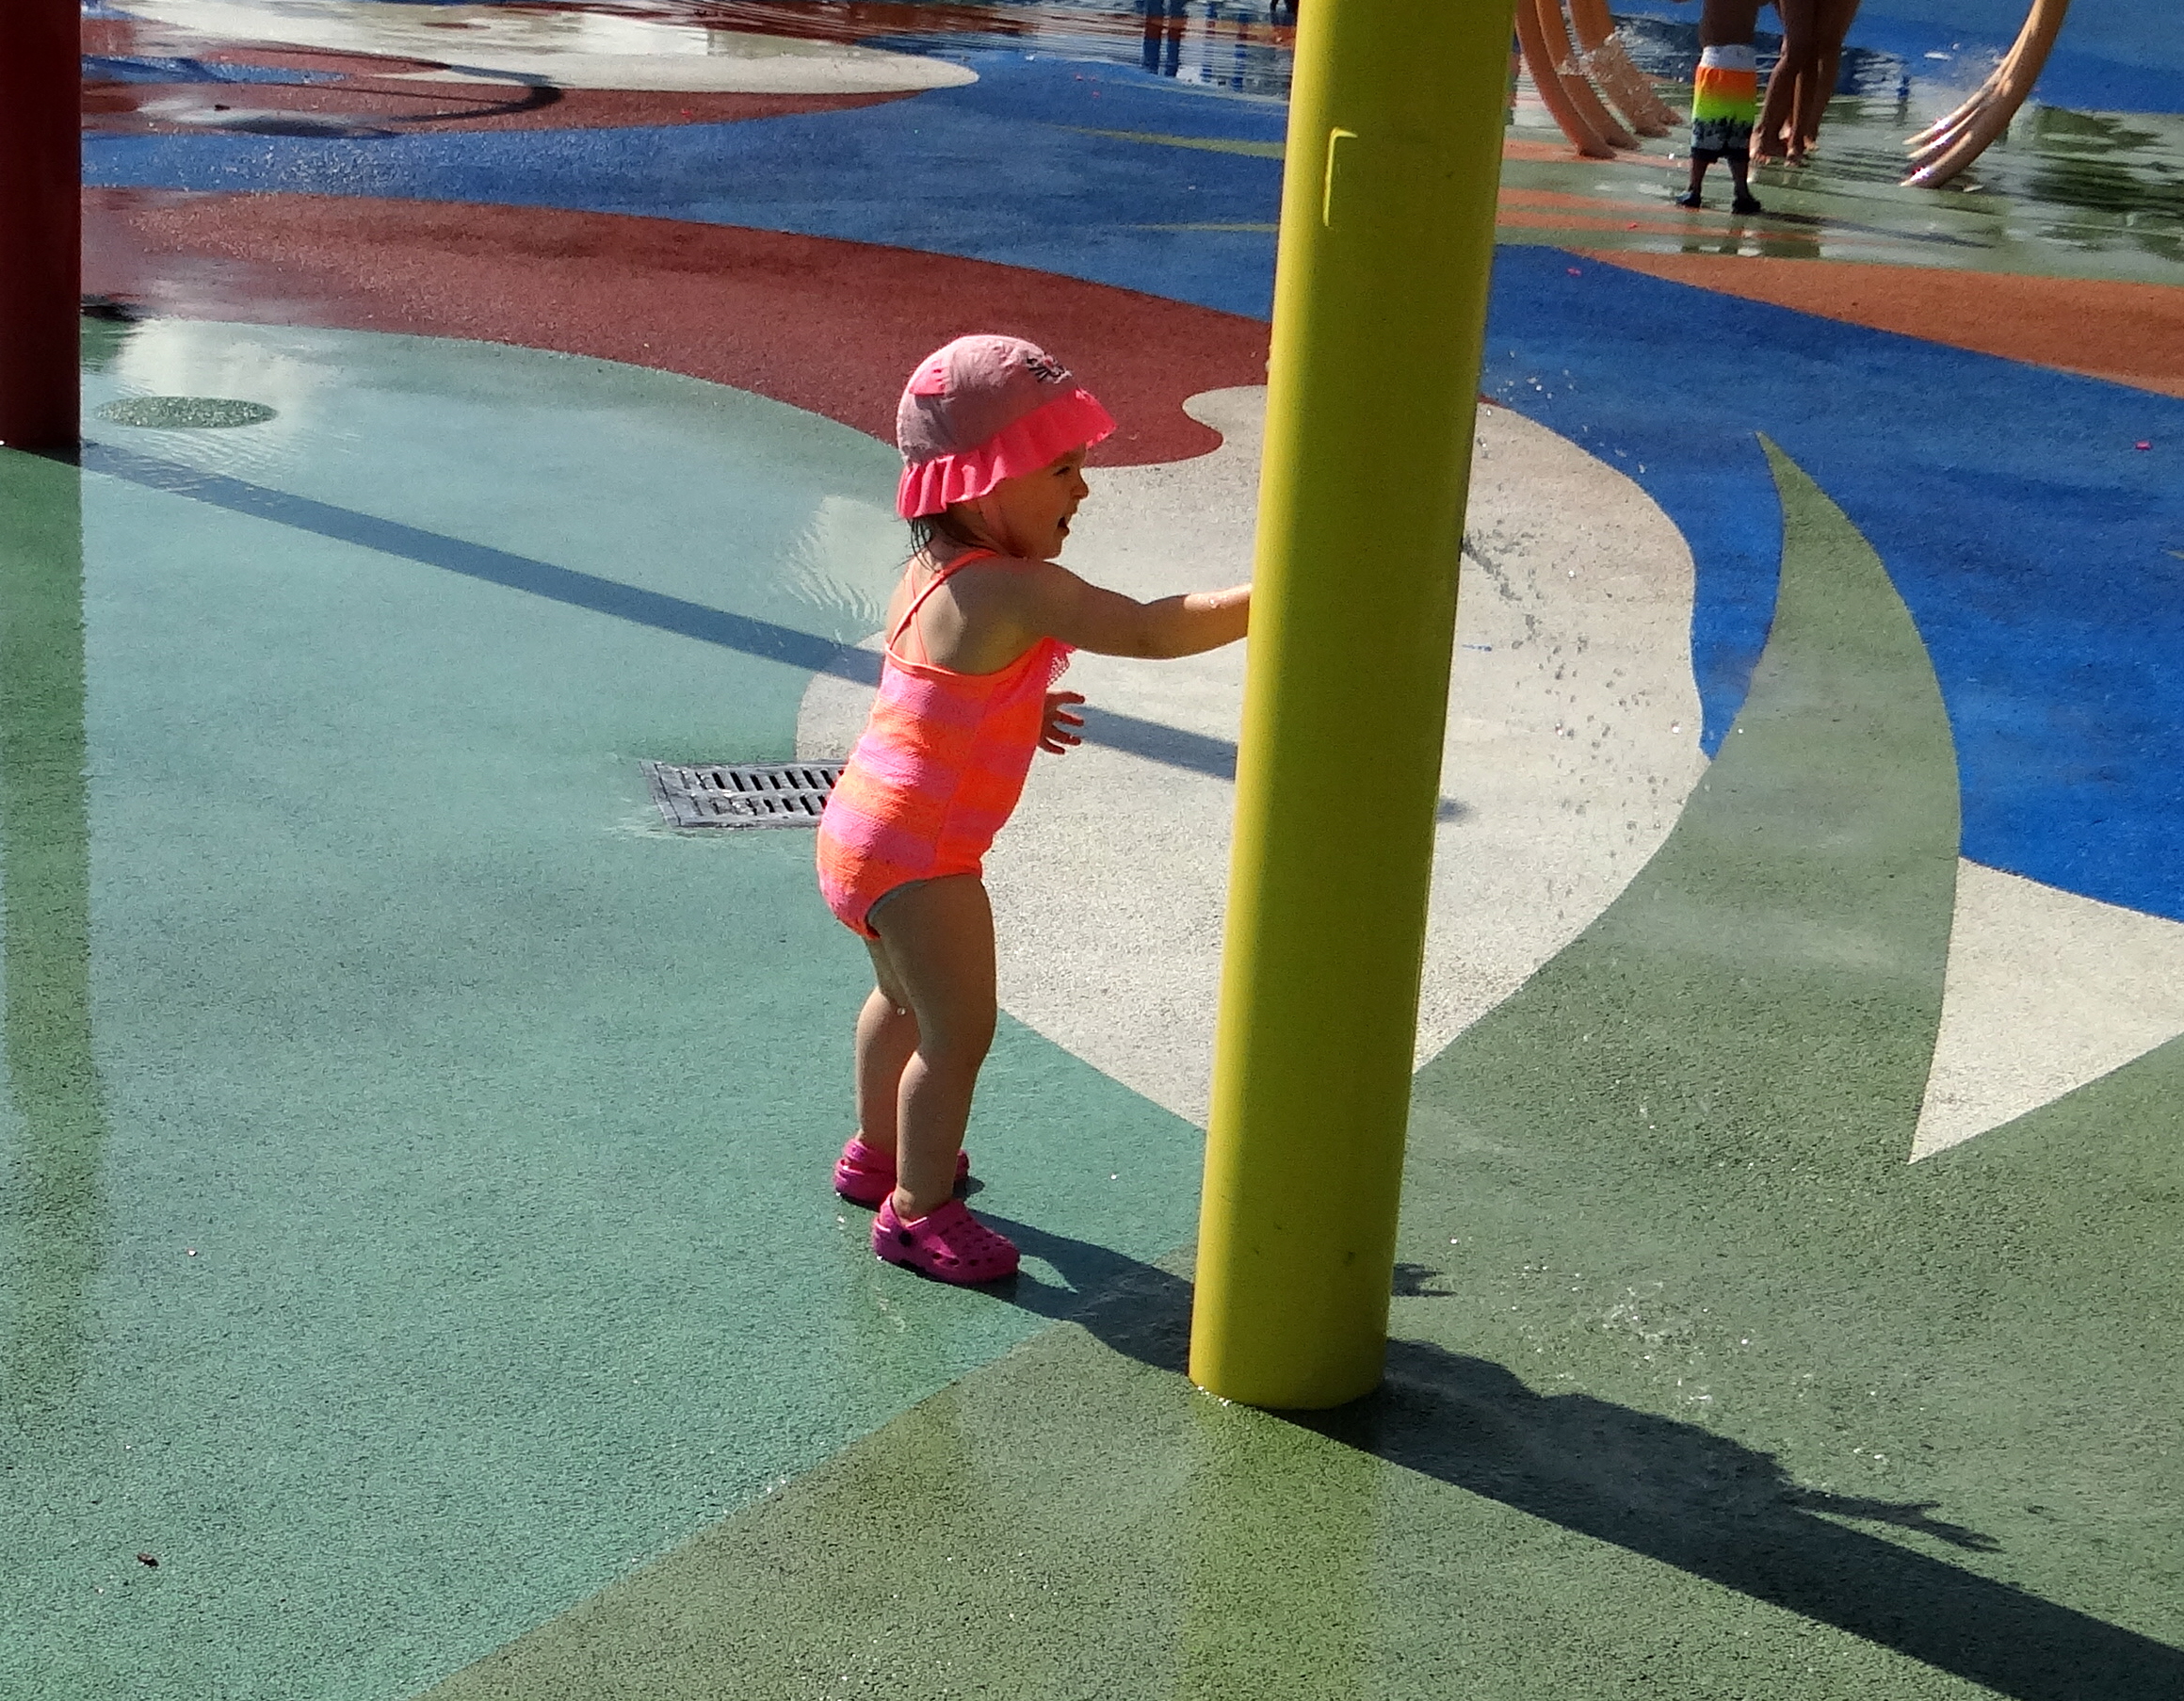 Peachy playing at the waterpark